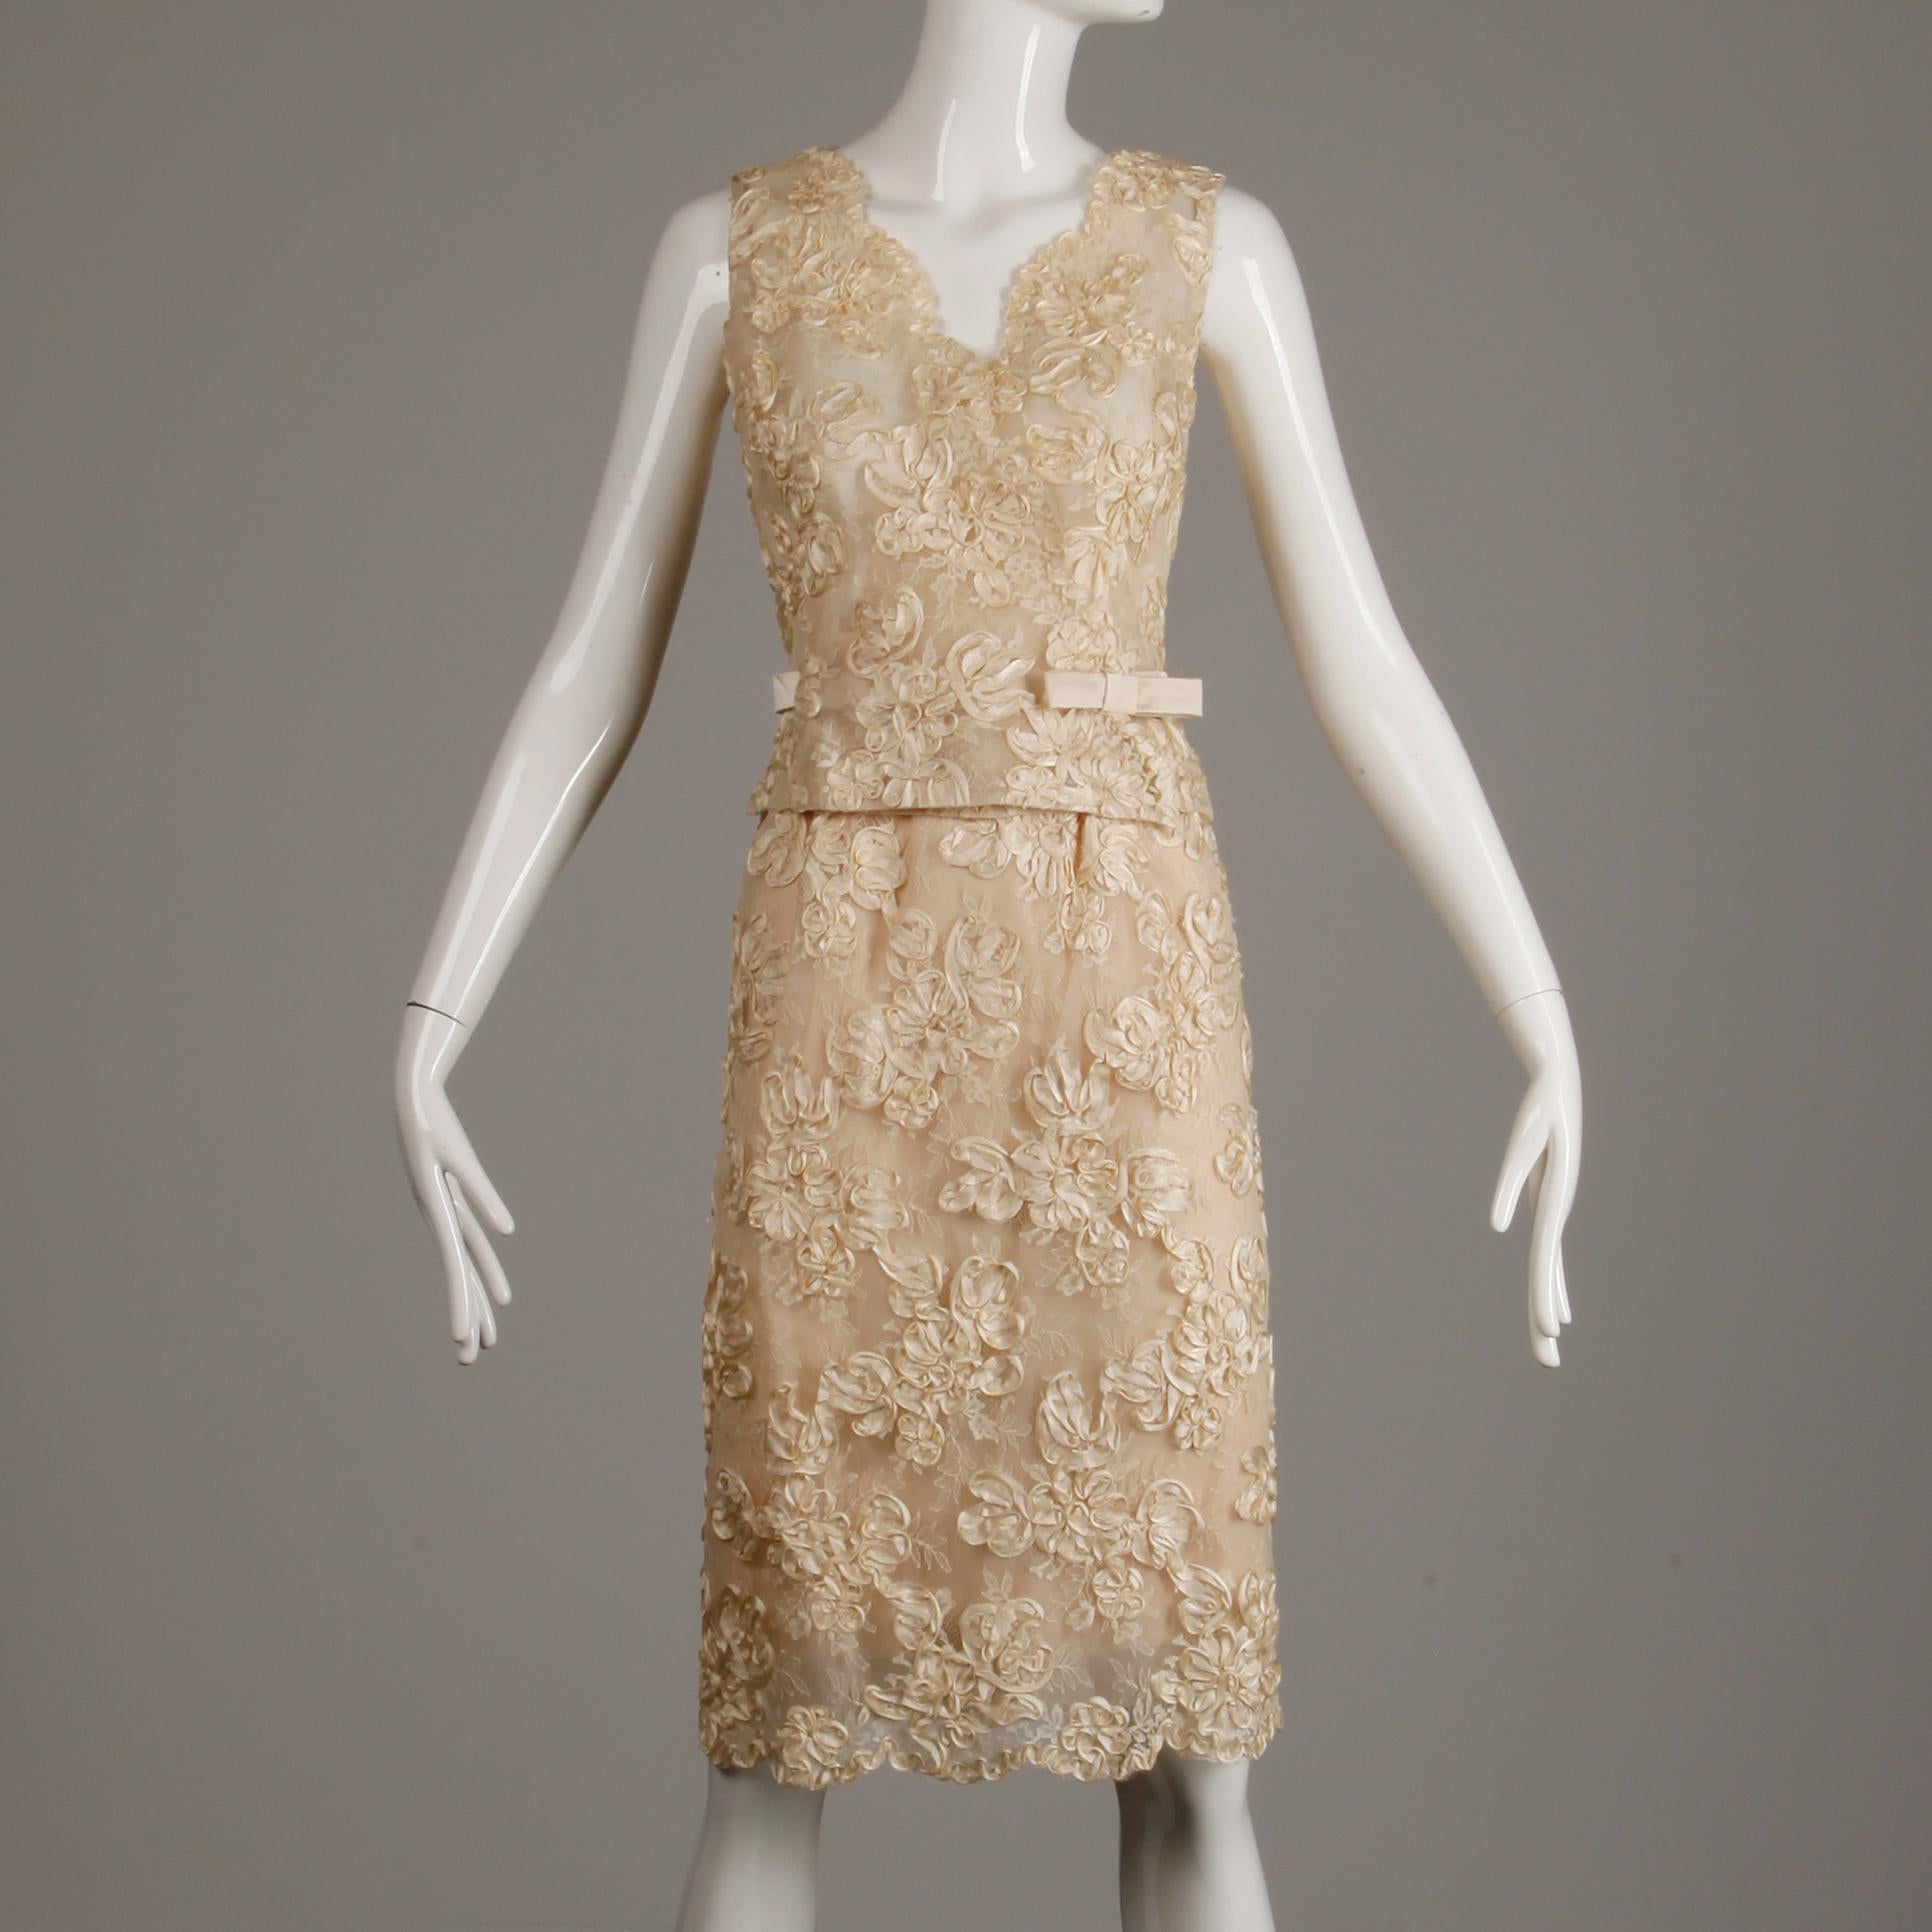 1960s Vintage Cream/ Off White Silk Soutache Lace Top/ Skirt Ensemble or Dress 1